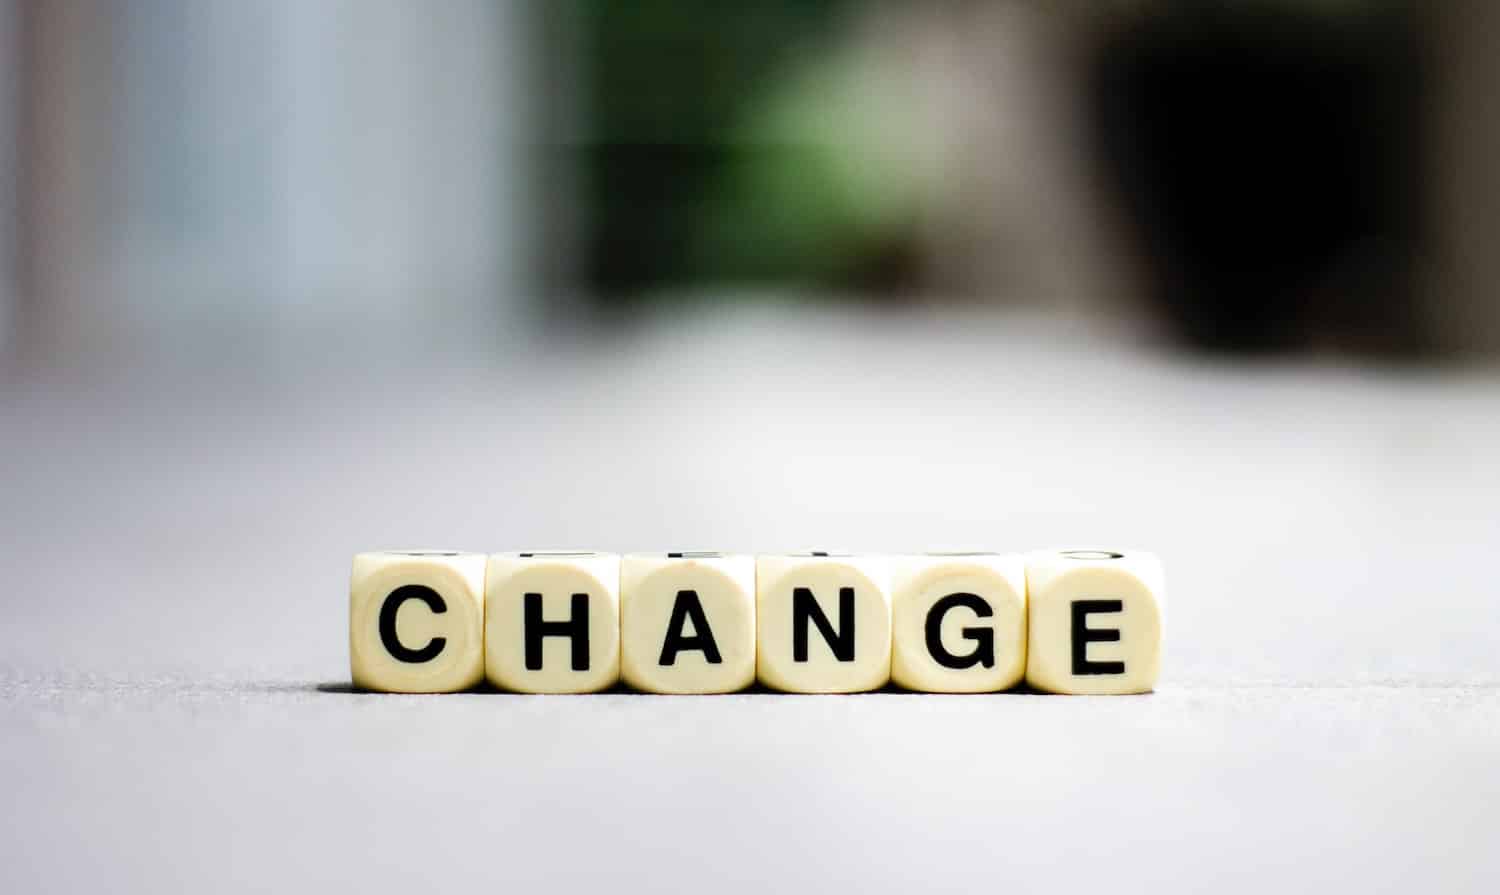 employee engagement definition - change